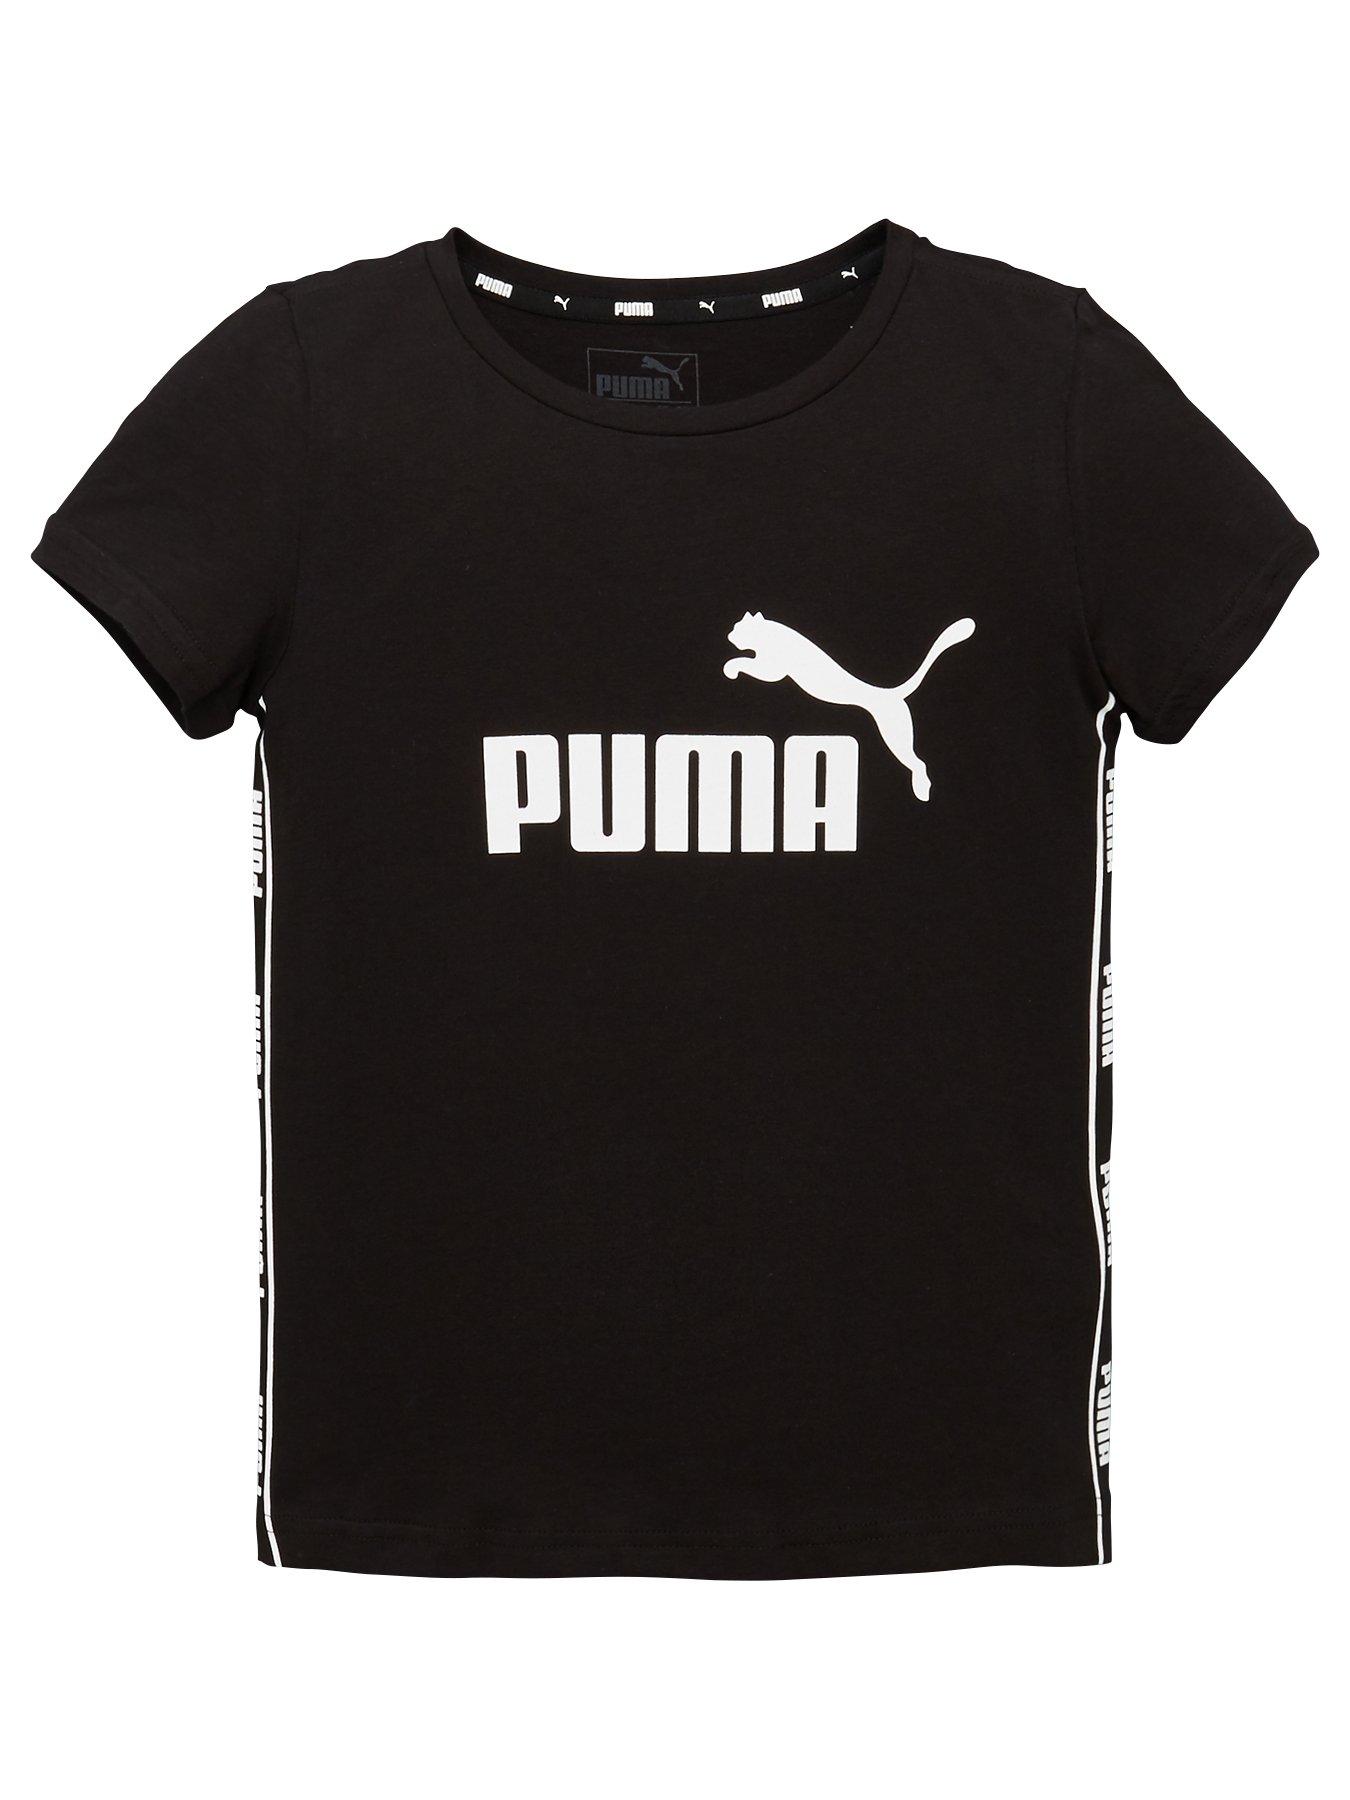 puma tops for girls